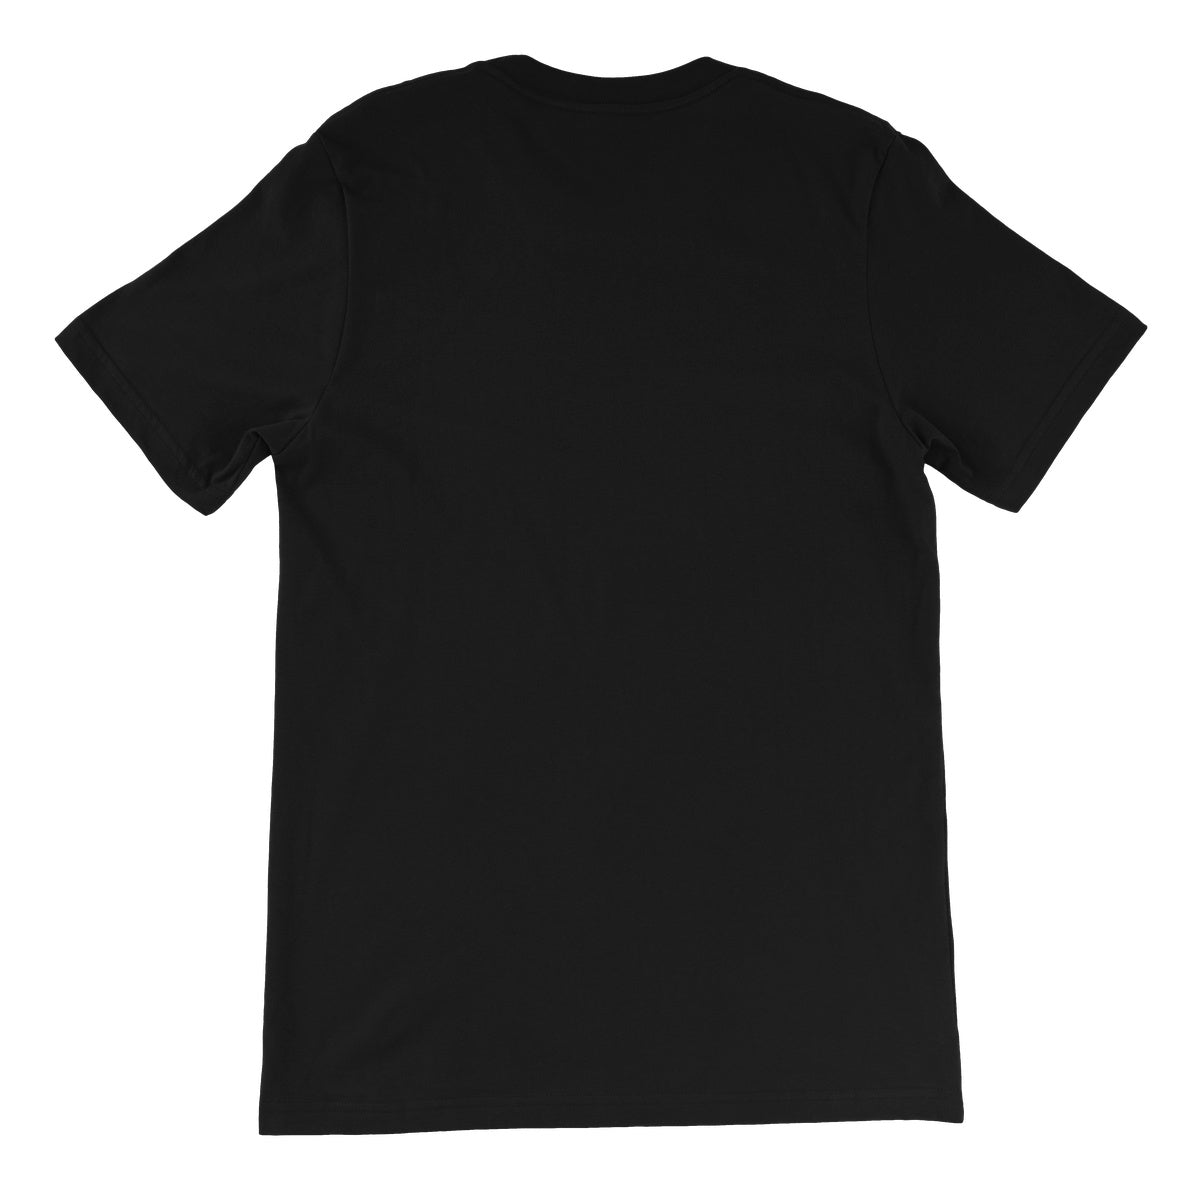 Garrison Creed Skull Unisex Short Sleeve T-Shirt